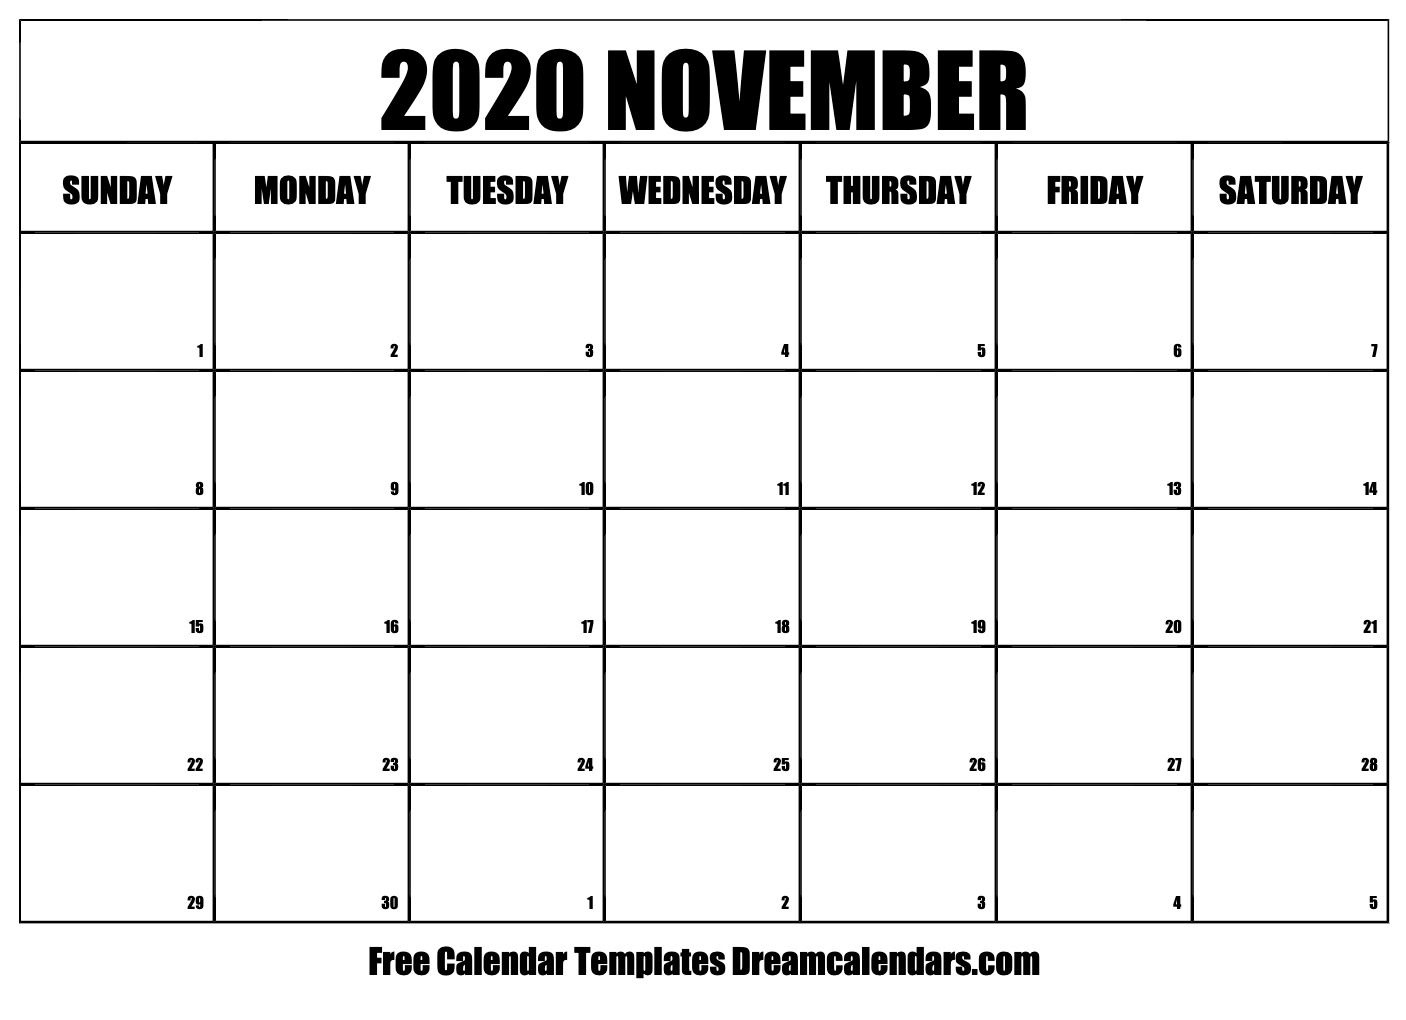 November 2020 Calendar | Free Calendar Template, Calendar Exceptional 2020 Calendar For November